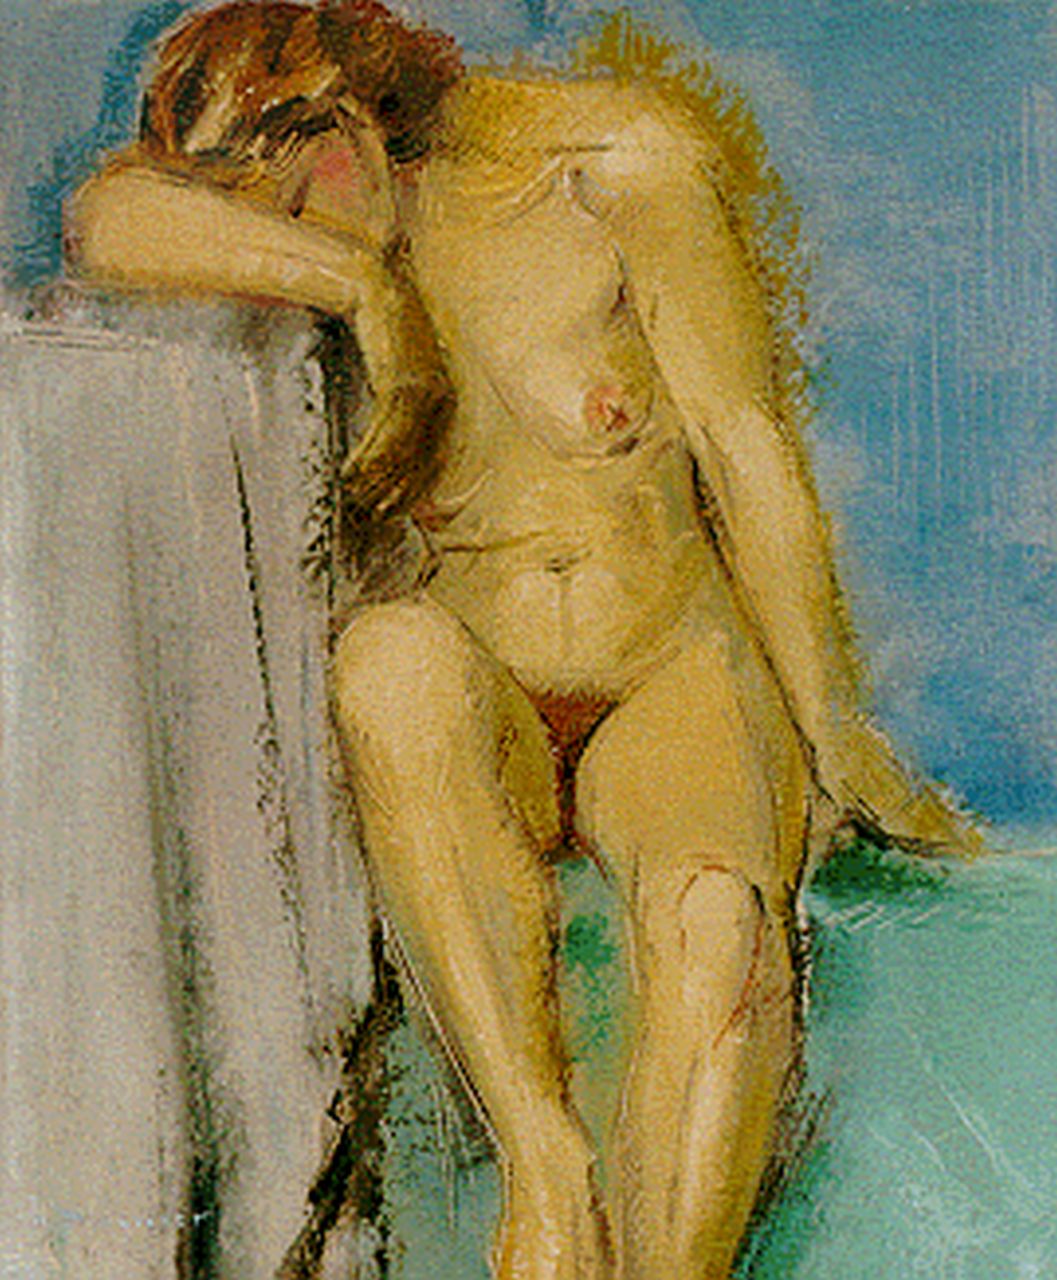 Pinguenet H.  | Henri Pinguenet, A seated nude, Öl auf Holz 47,1 x 38,8 cm, signed l.l.